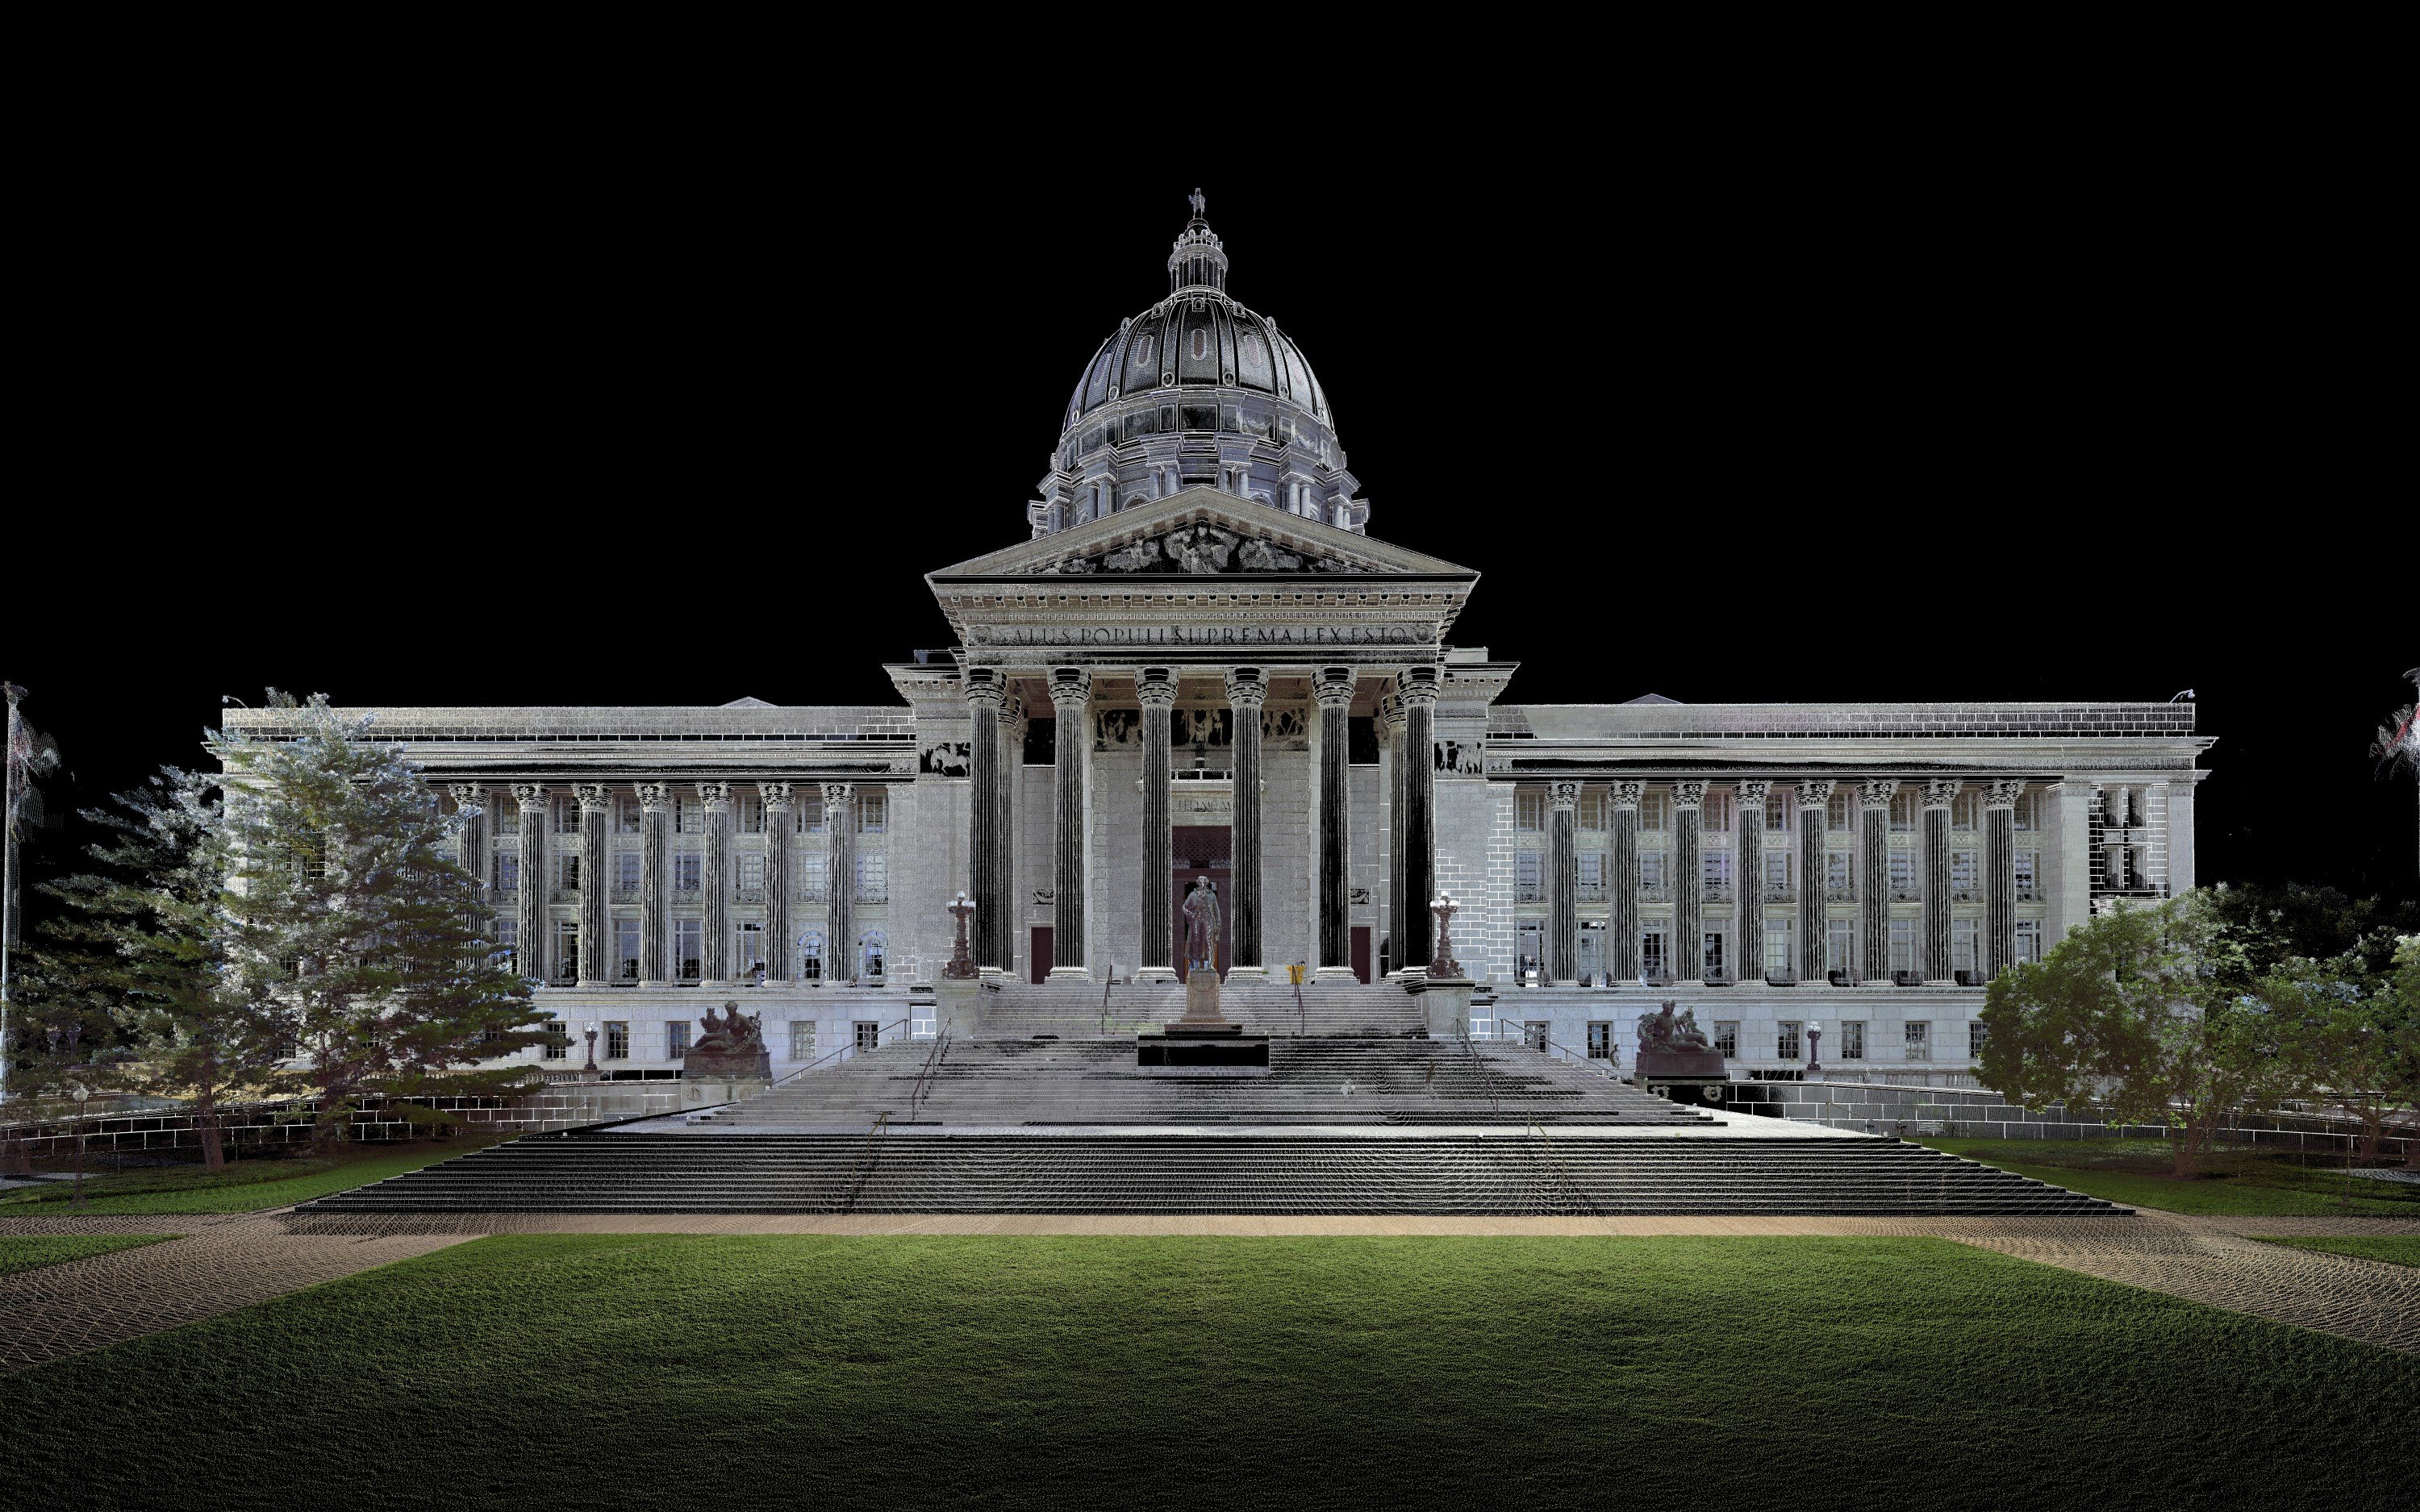 Missouri State Capitol Building